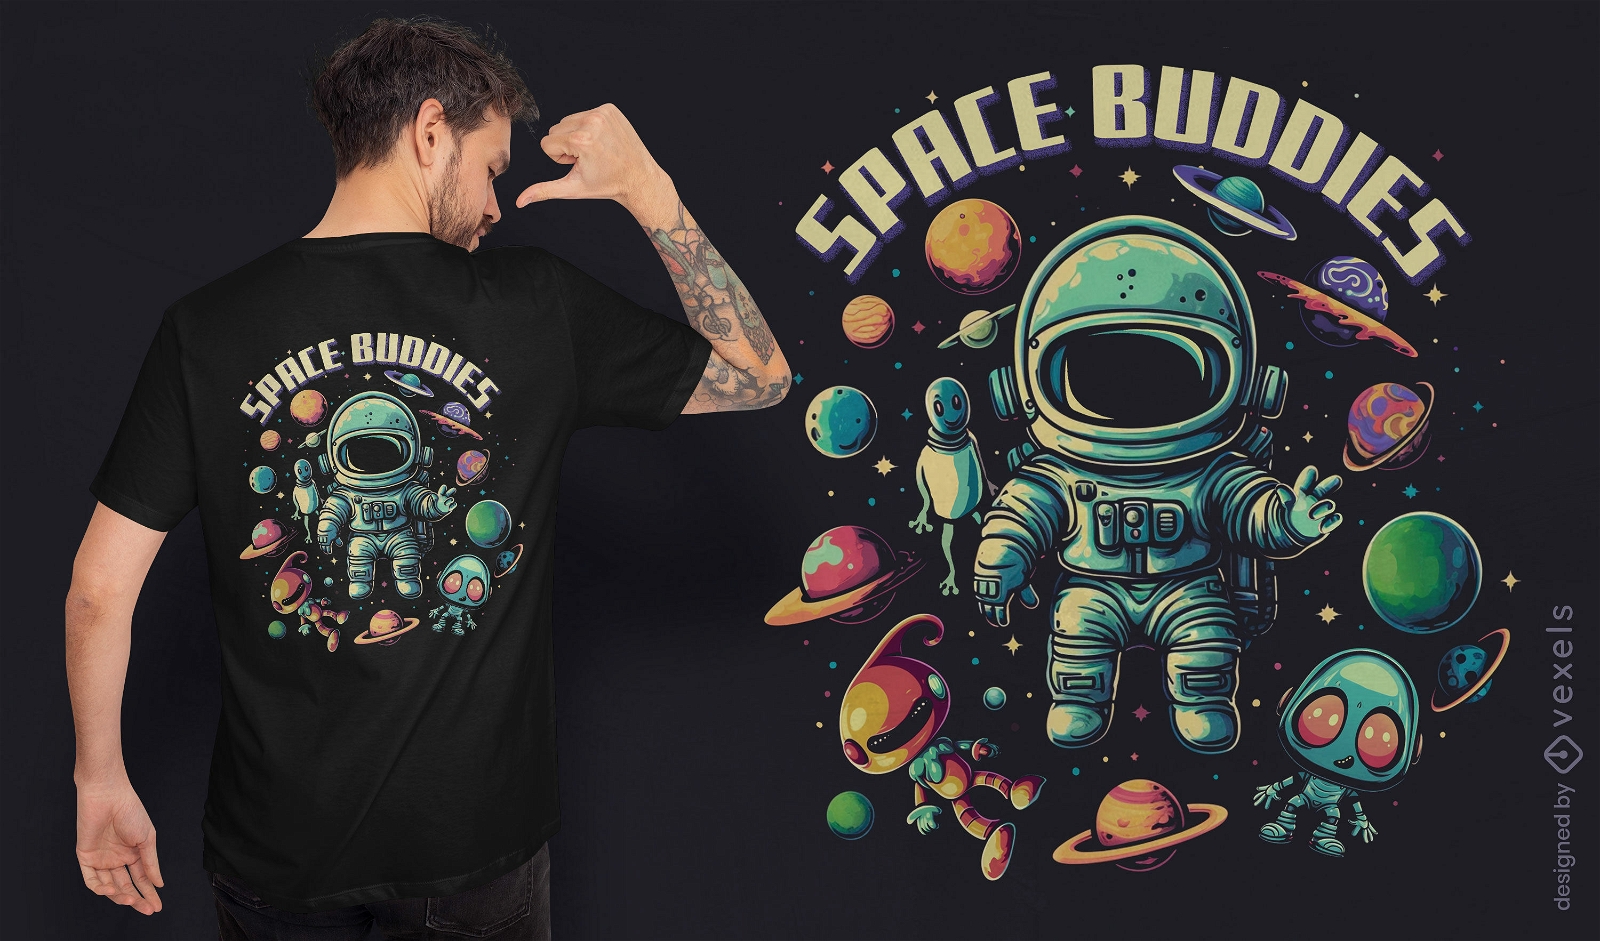 Dise?o de camiseta de amigos espaciales.